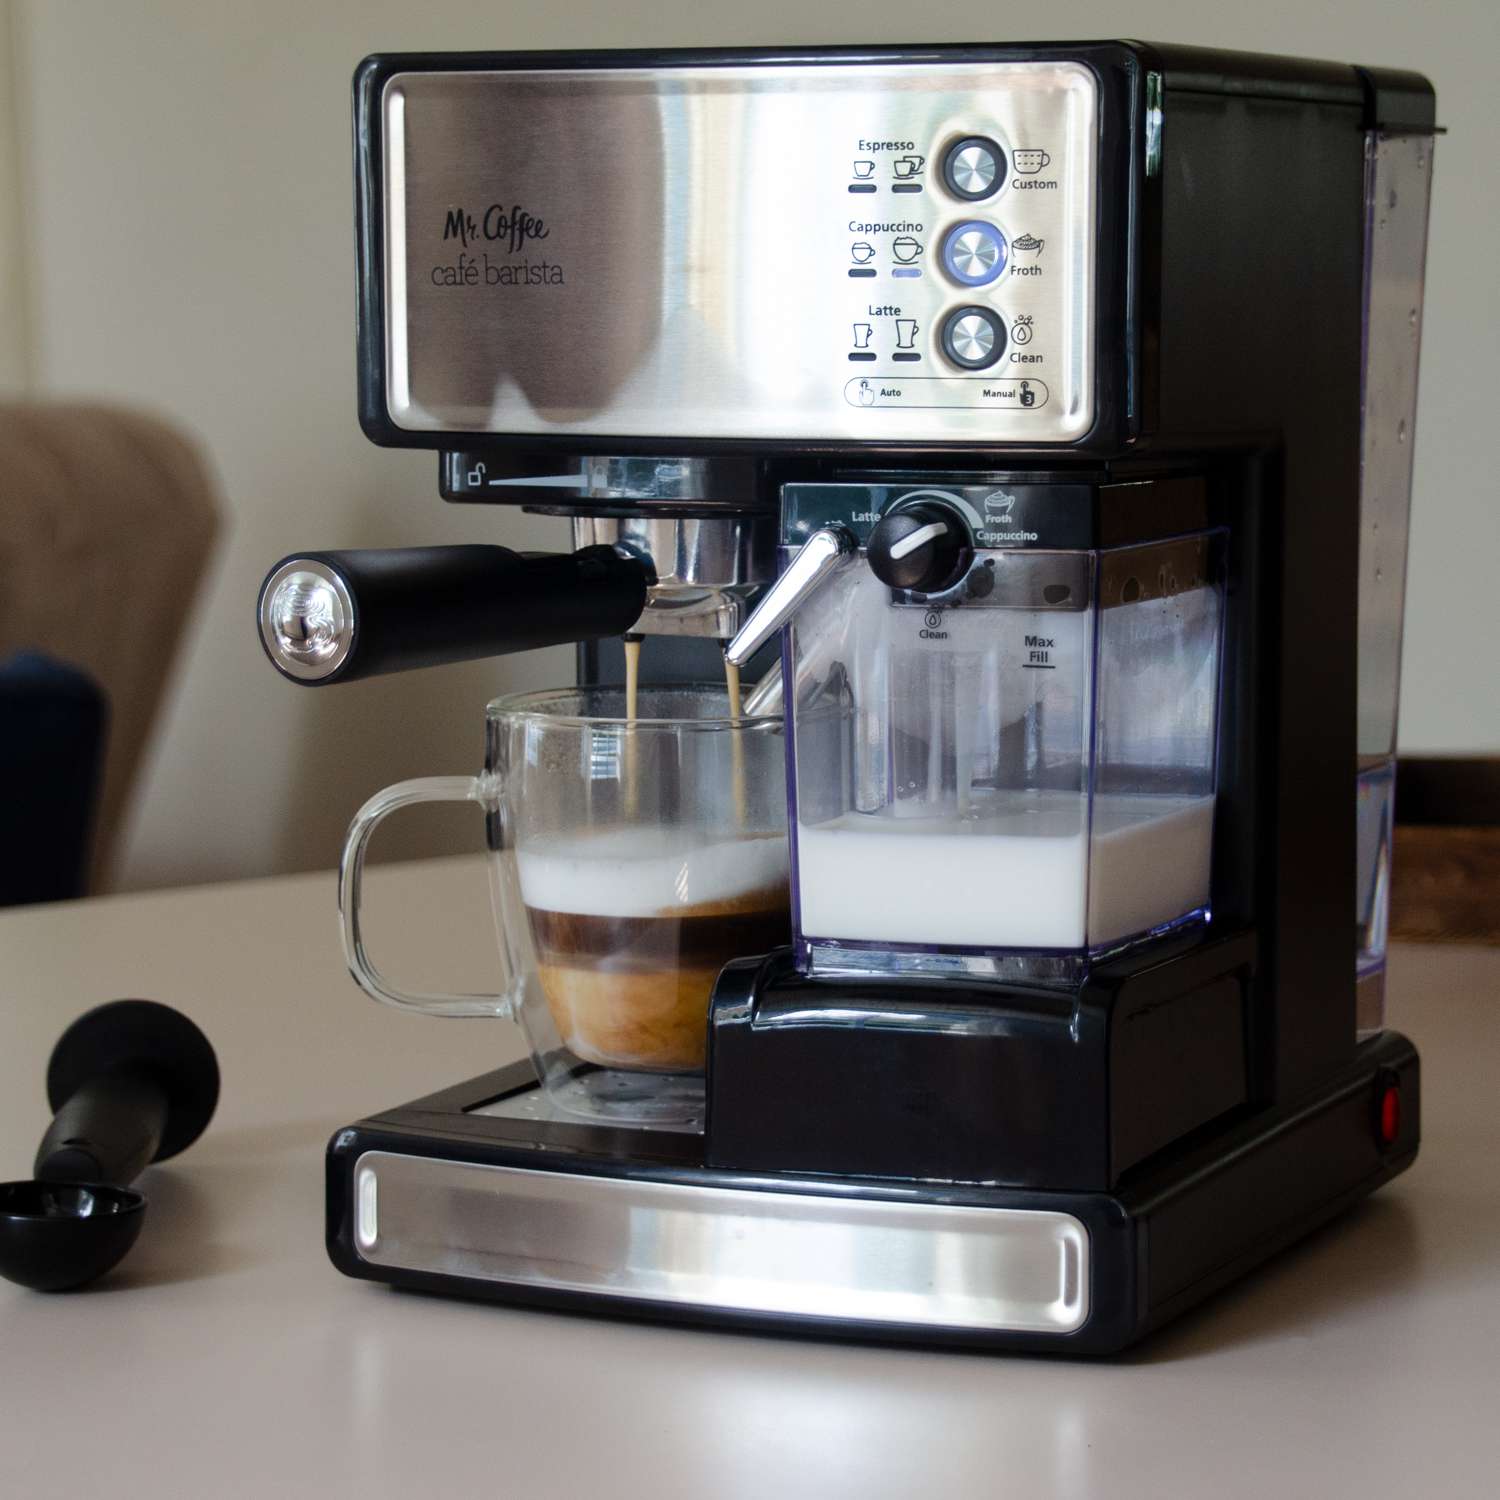 How To Use The Mr. Coffee Espresso Machine